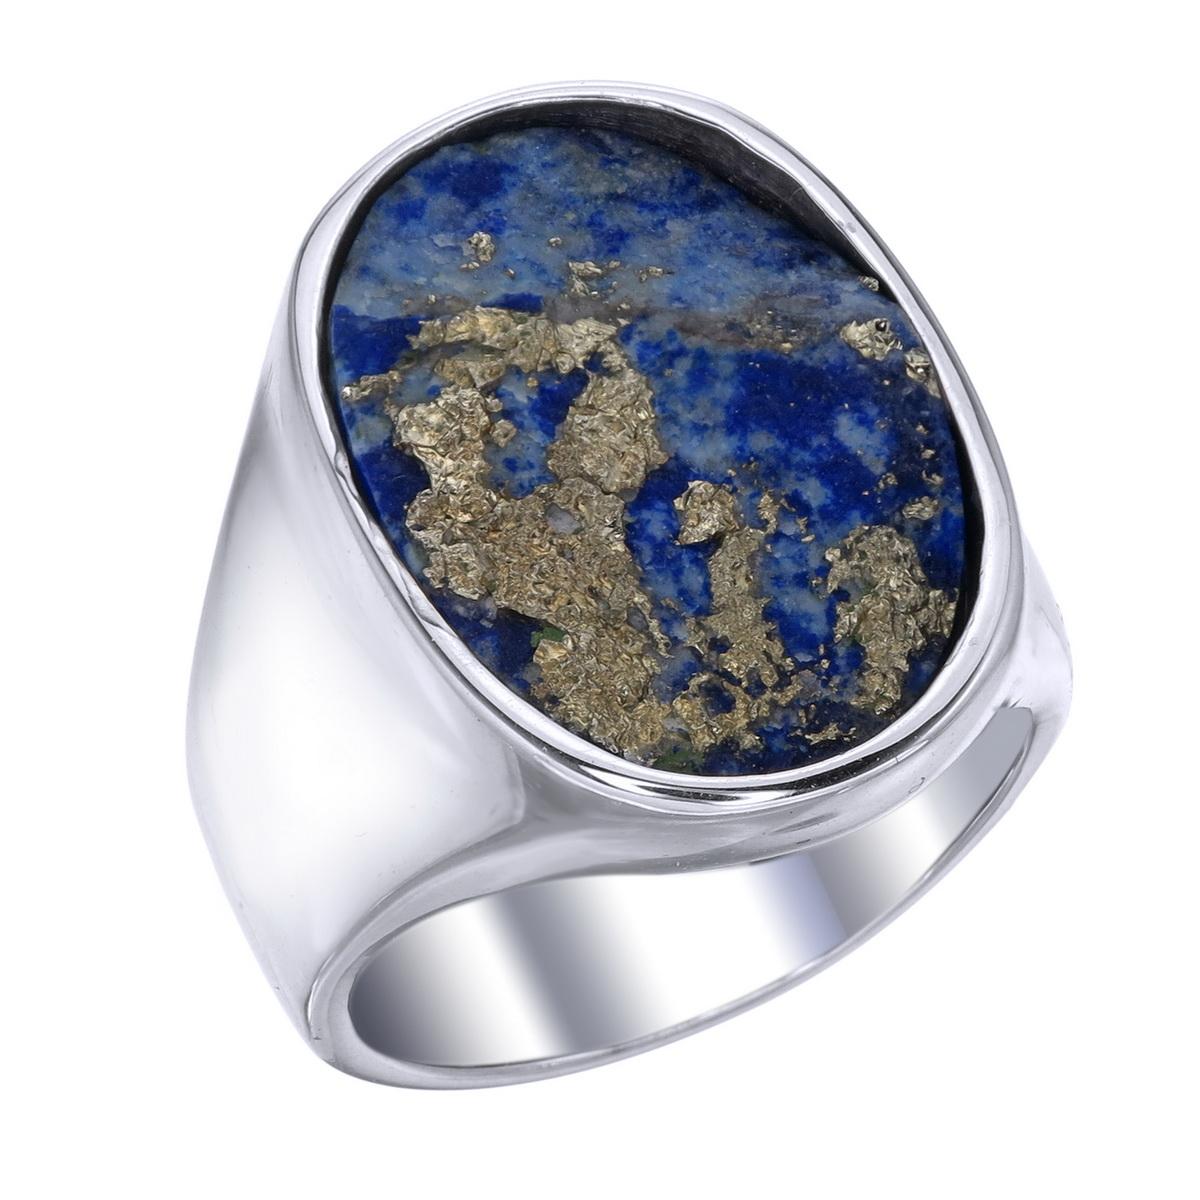 Orloff of Denmark, Excellent 8.7 carat Lapis Lazuli Sterling Silver Ring 